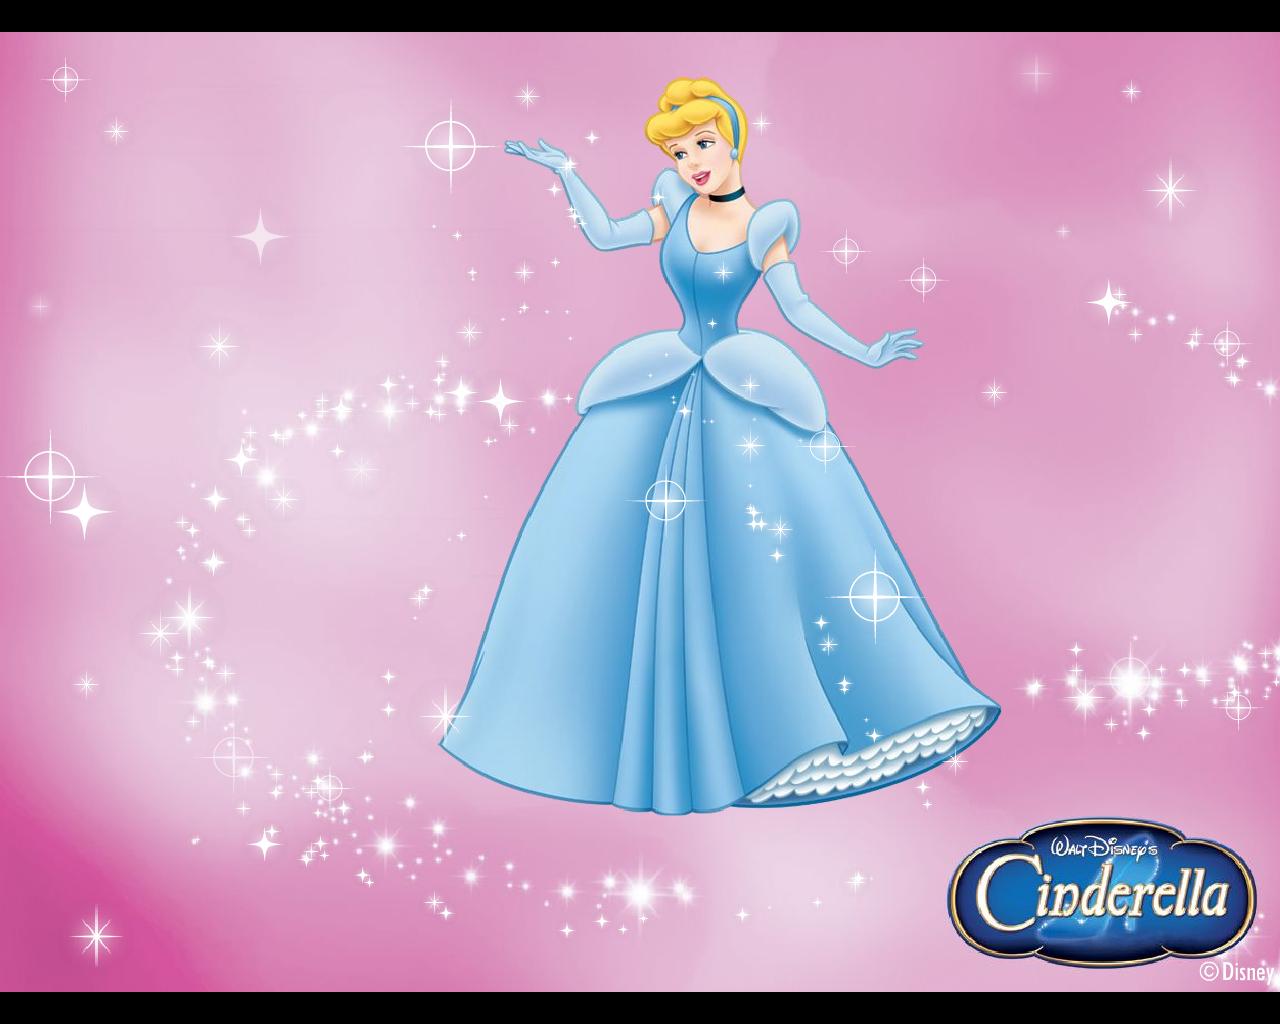 Disney Cinderella Wallpapers - Wallpaper Cave